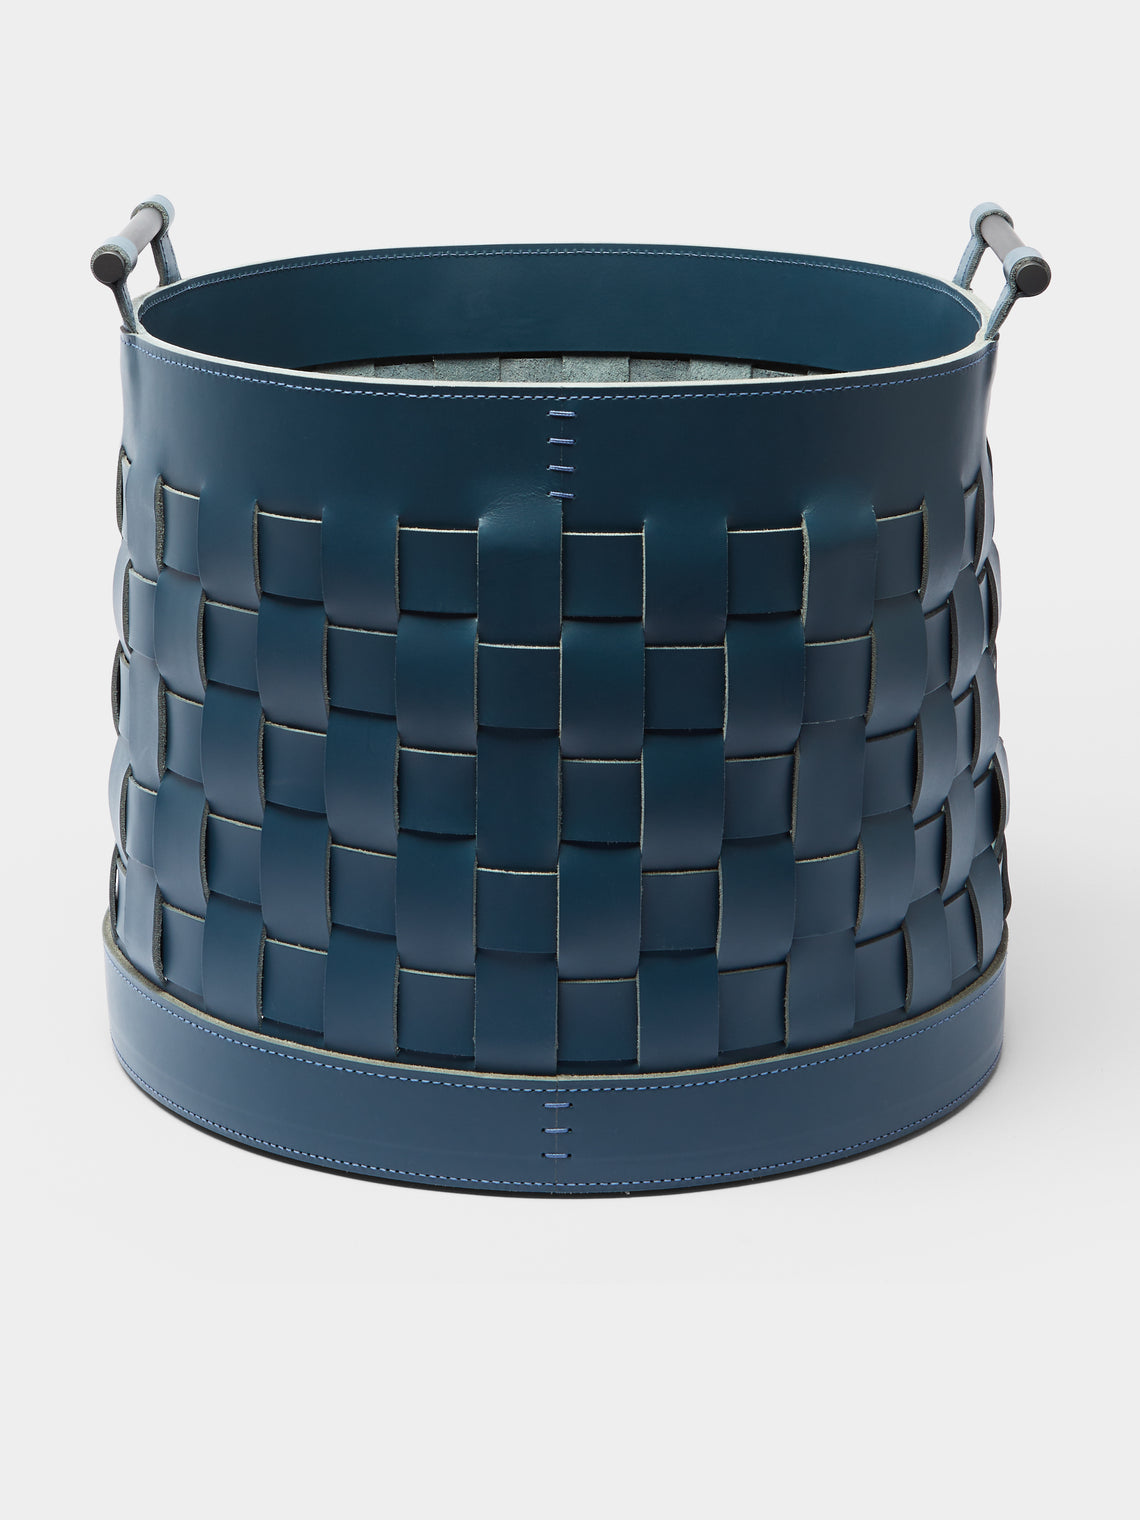 Rabitti 1969 - Ravenna Woven Leather Round Basket - Blue - ABASK - 